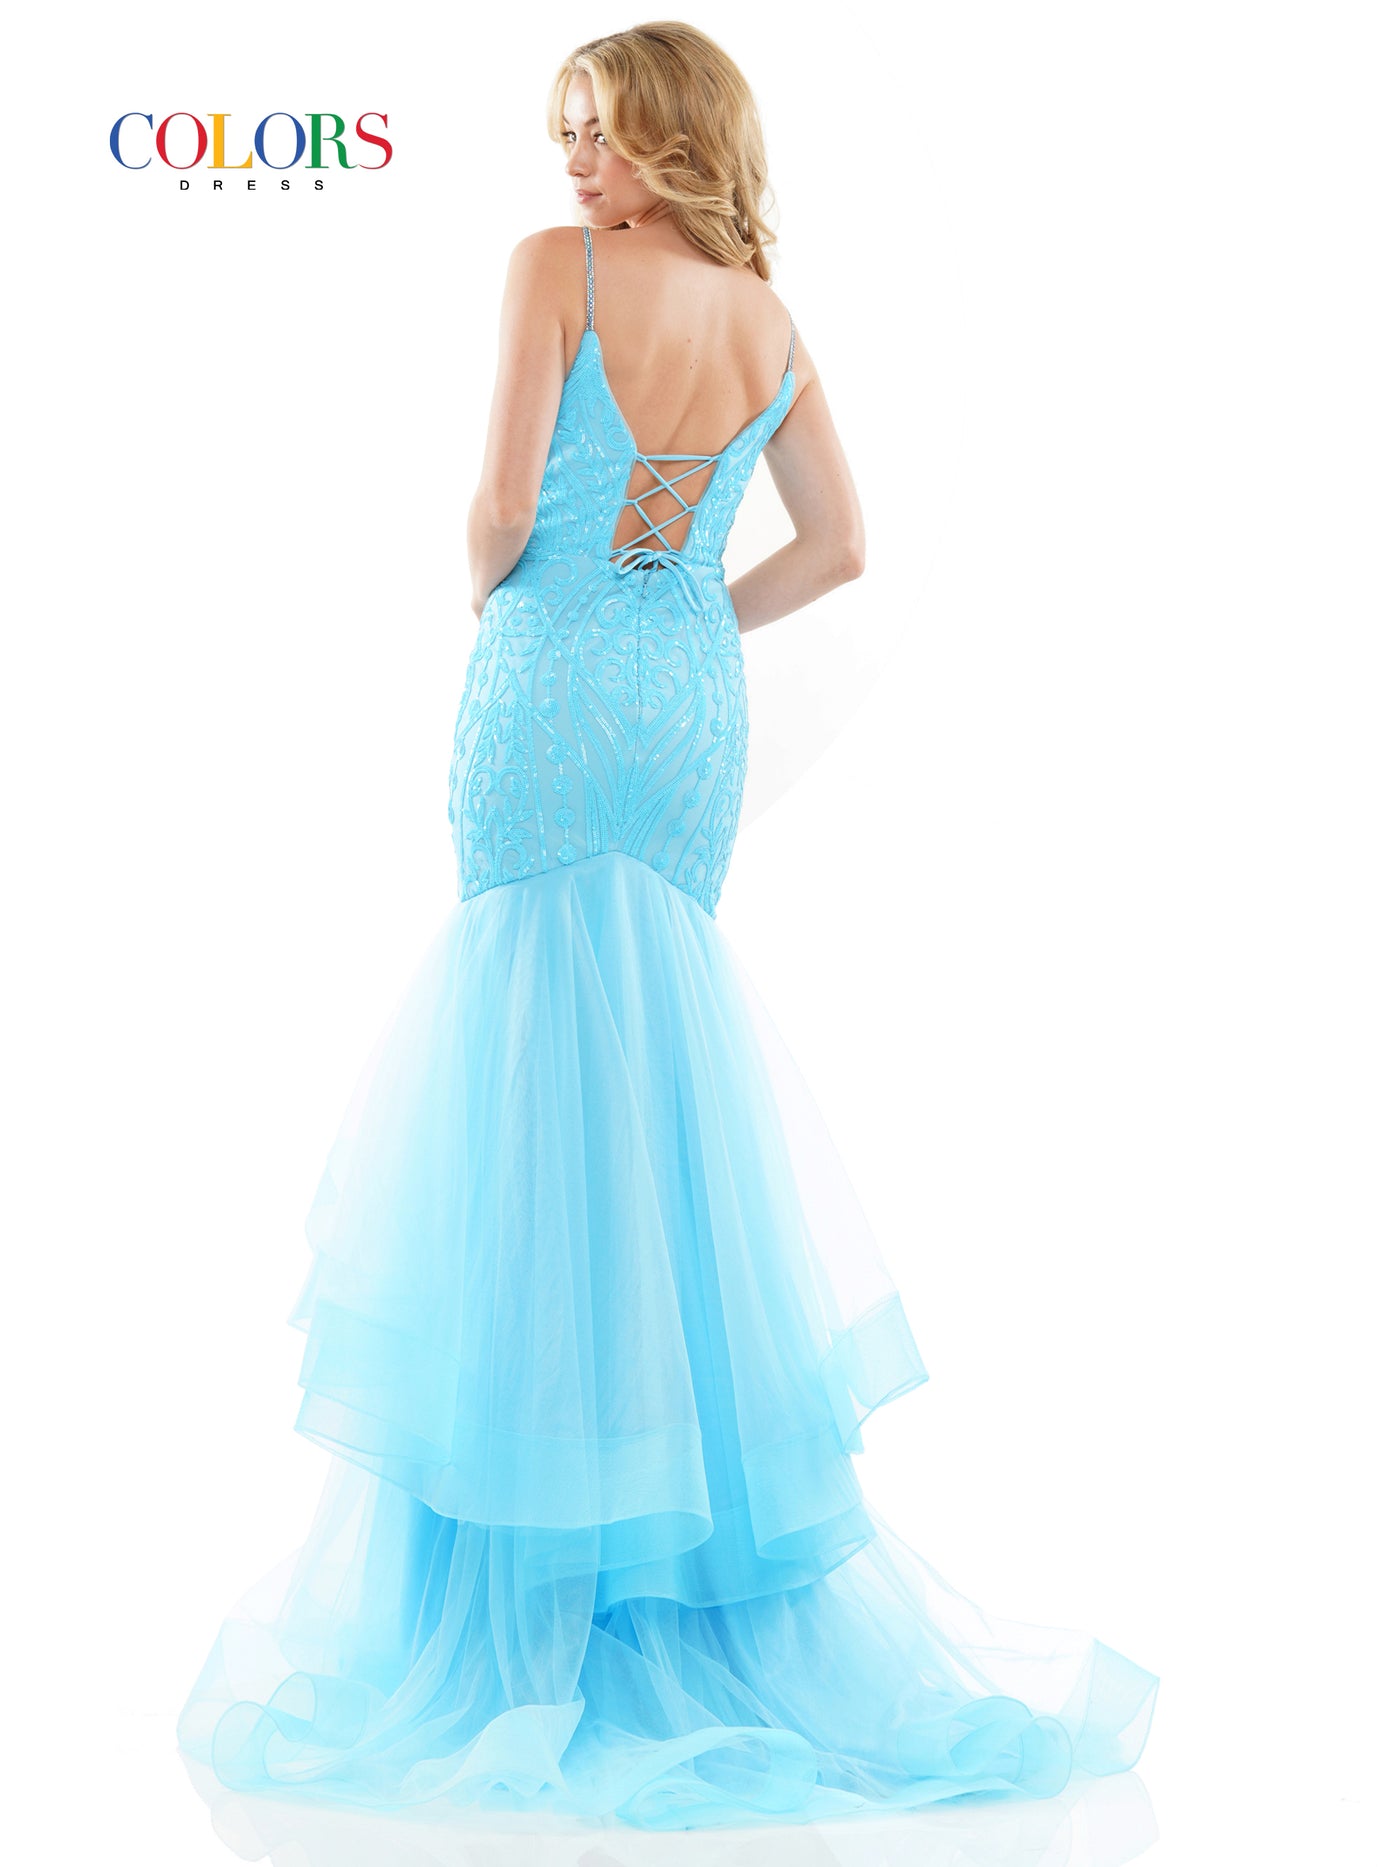 Colors Dress 2978 Turquoise Prom Dress